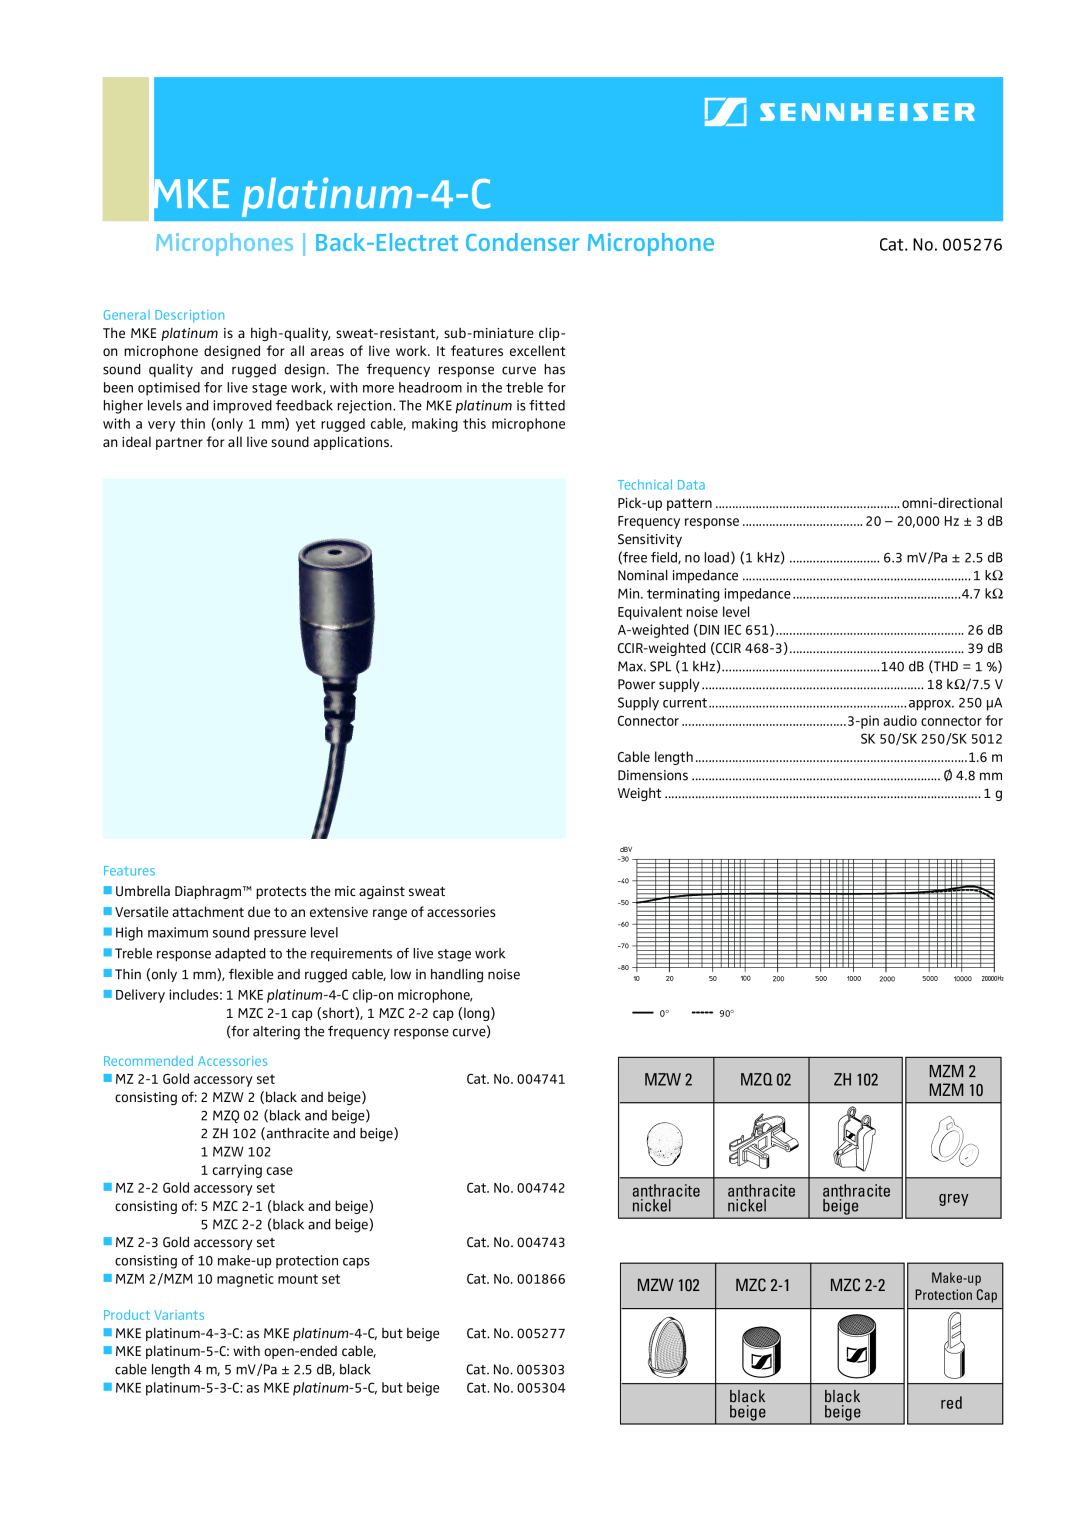 Sennheiser 5276 dimensions MKE platinum-4-C, Microphones Back-Electret Condenser Microphone 